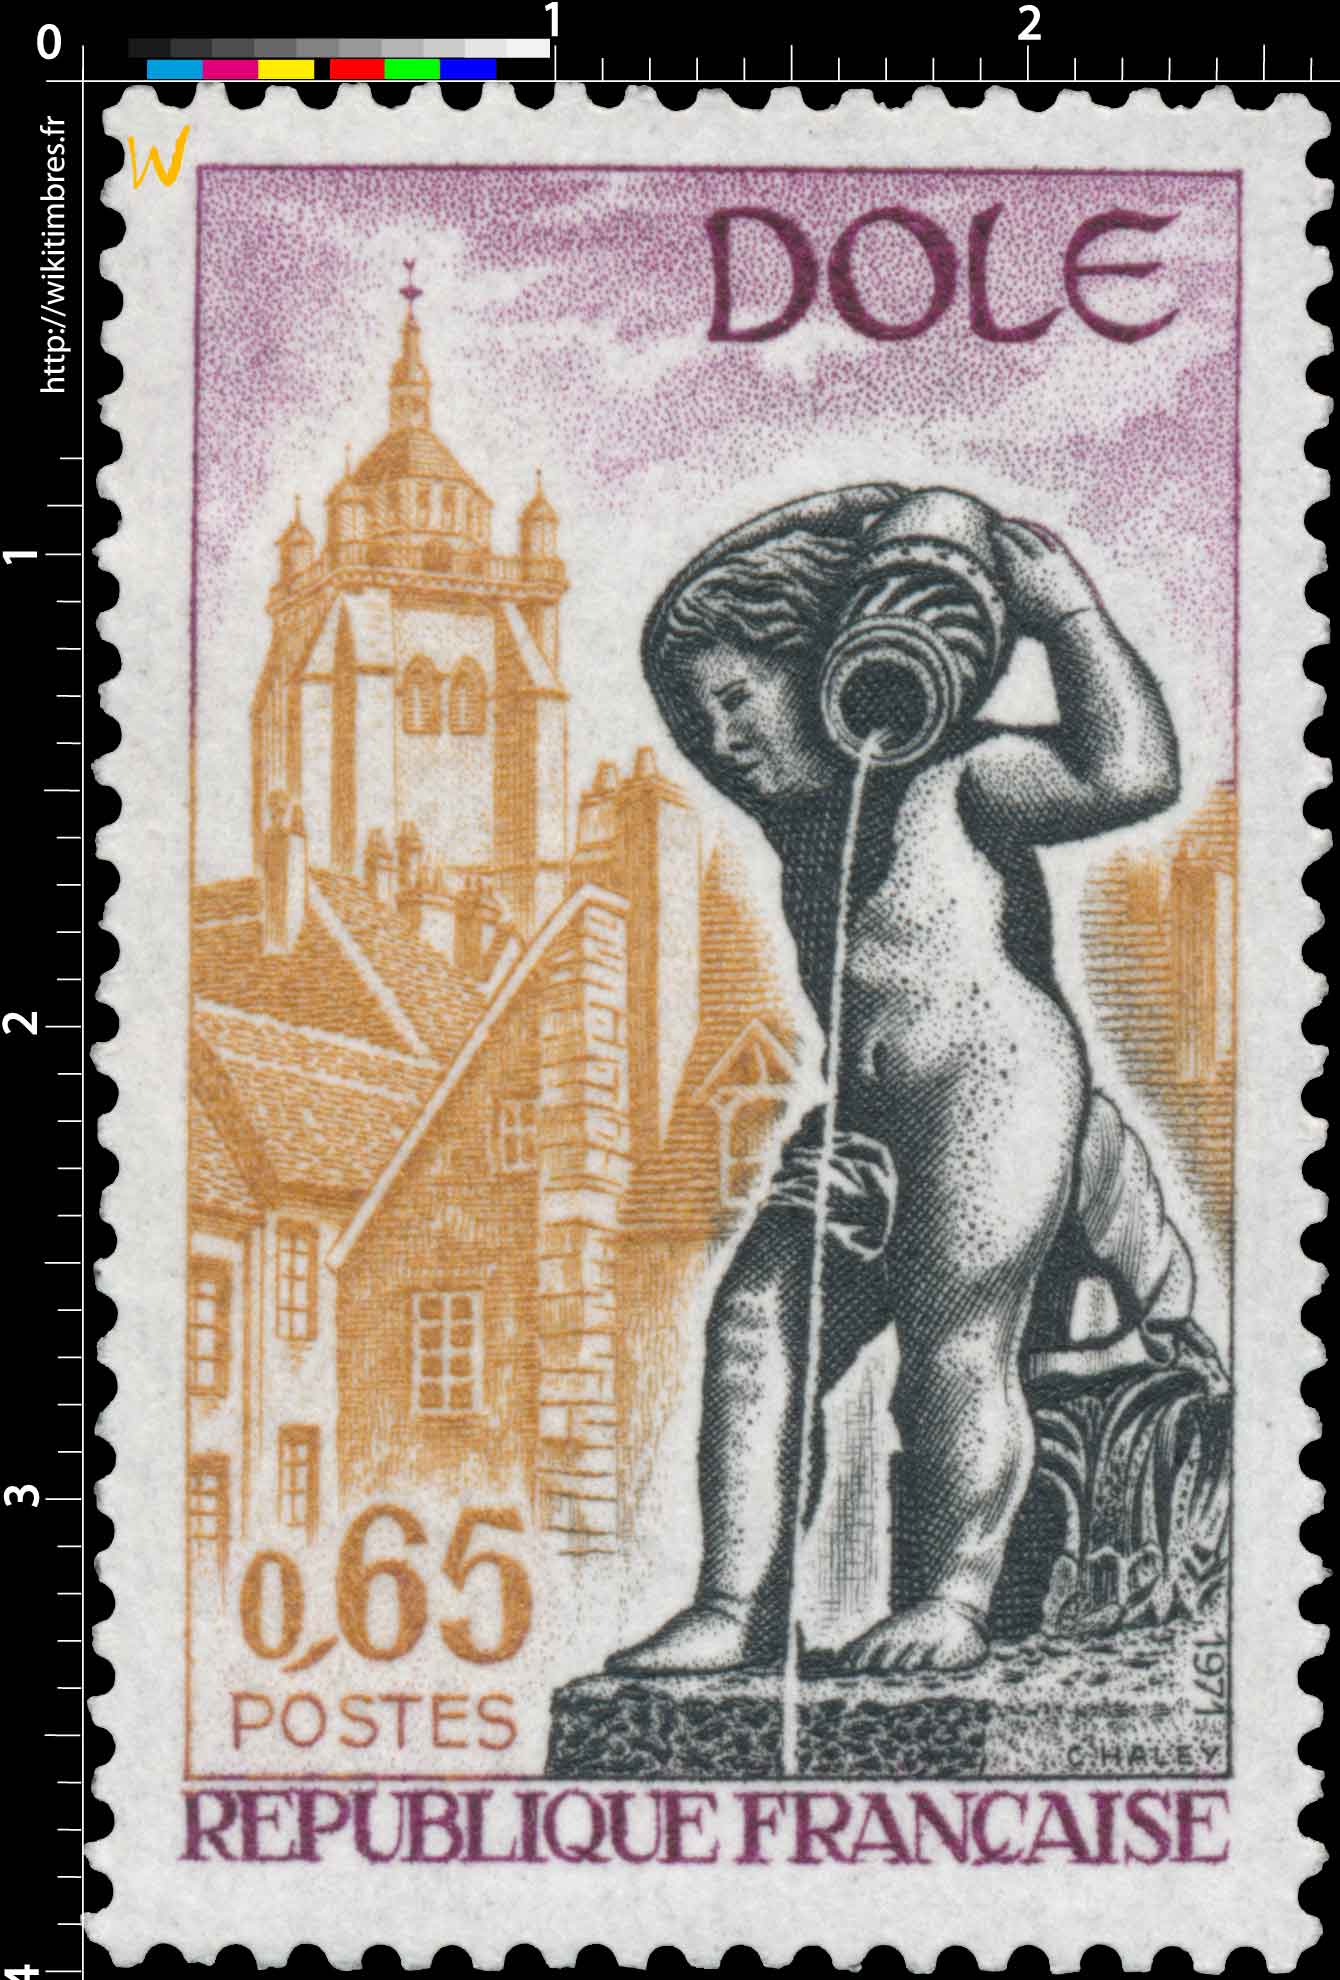 1971 DOLE